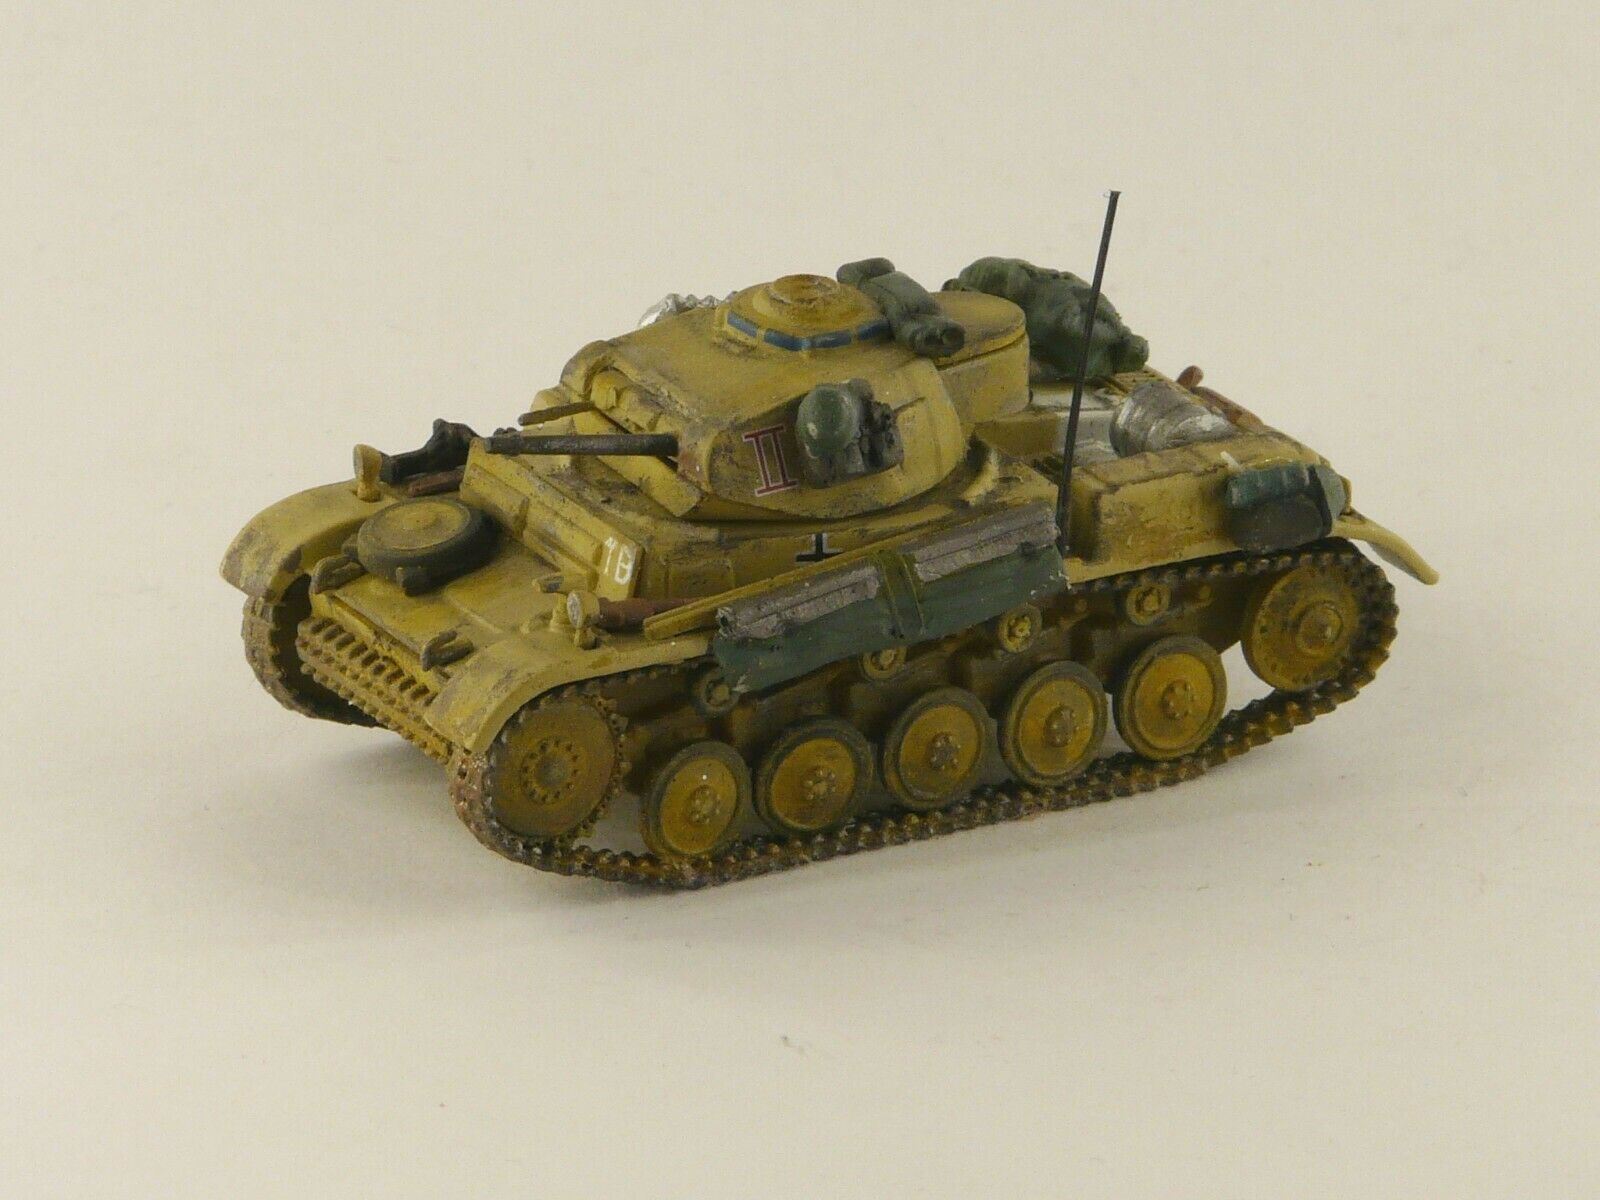 Redog 1:72/76 German Panzer II Military Scale Modelling Stowage Diorama Accessorises - redoguk